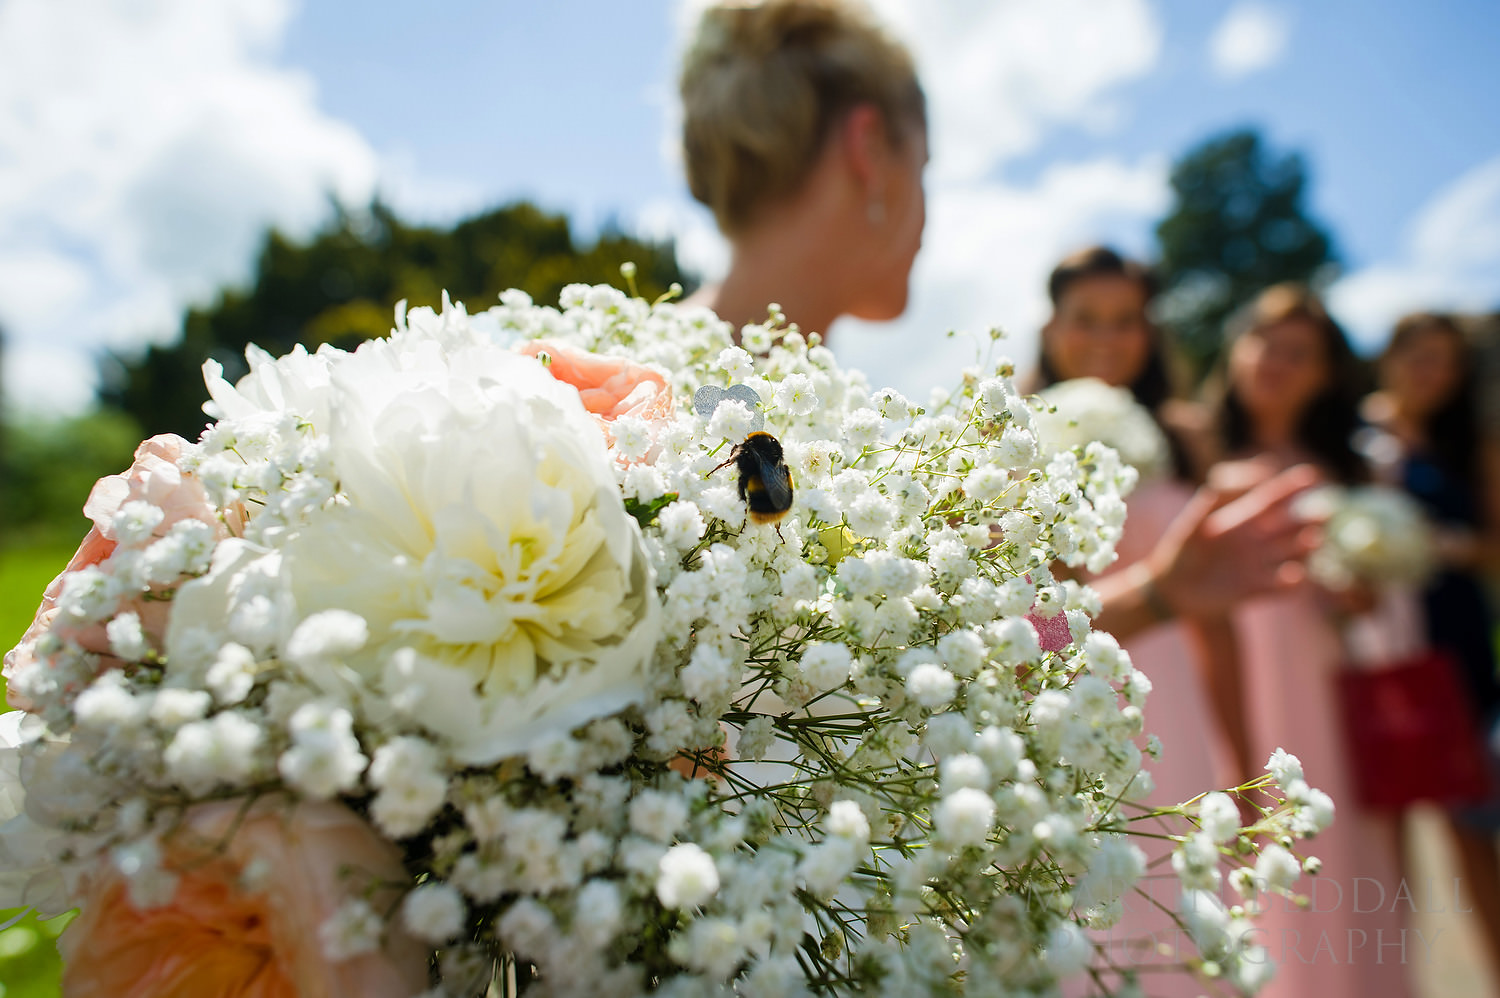 Bumblebee lands on the bride's wedding bouquet